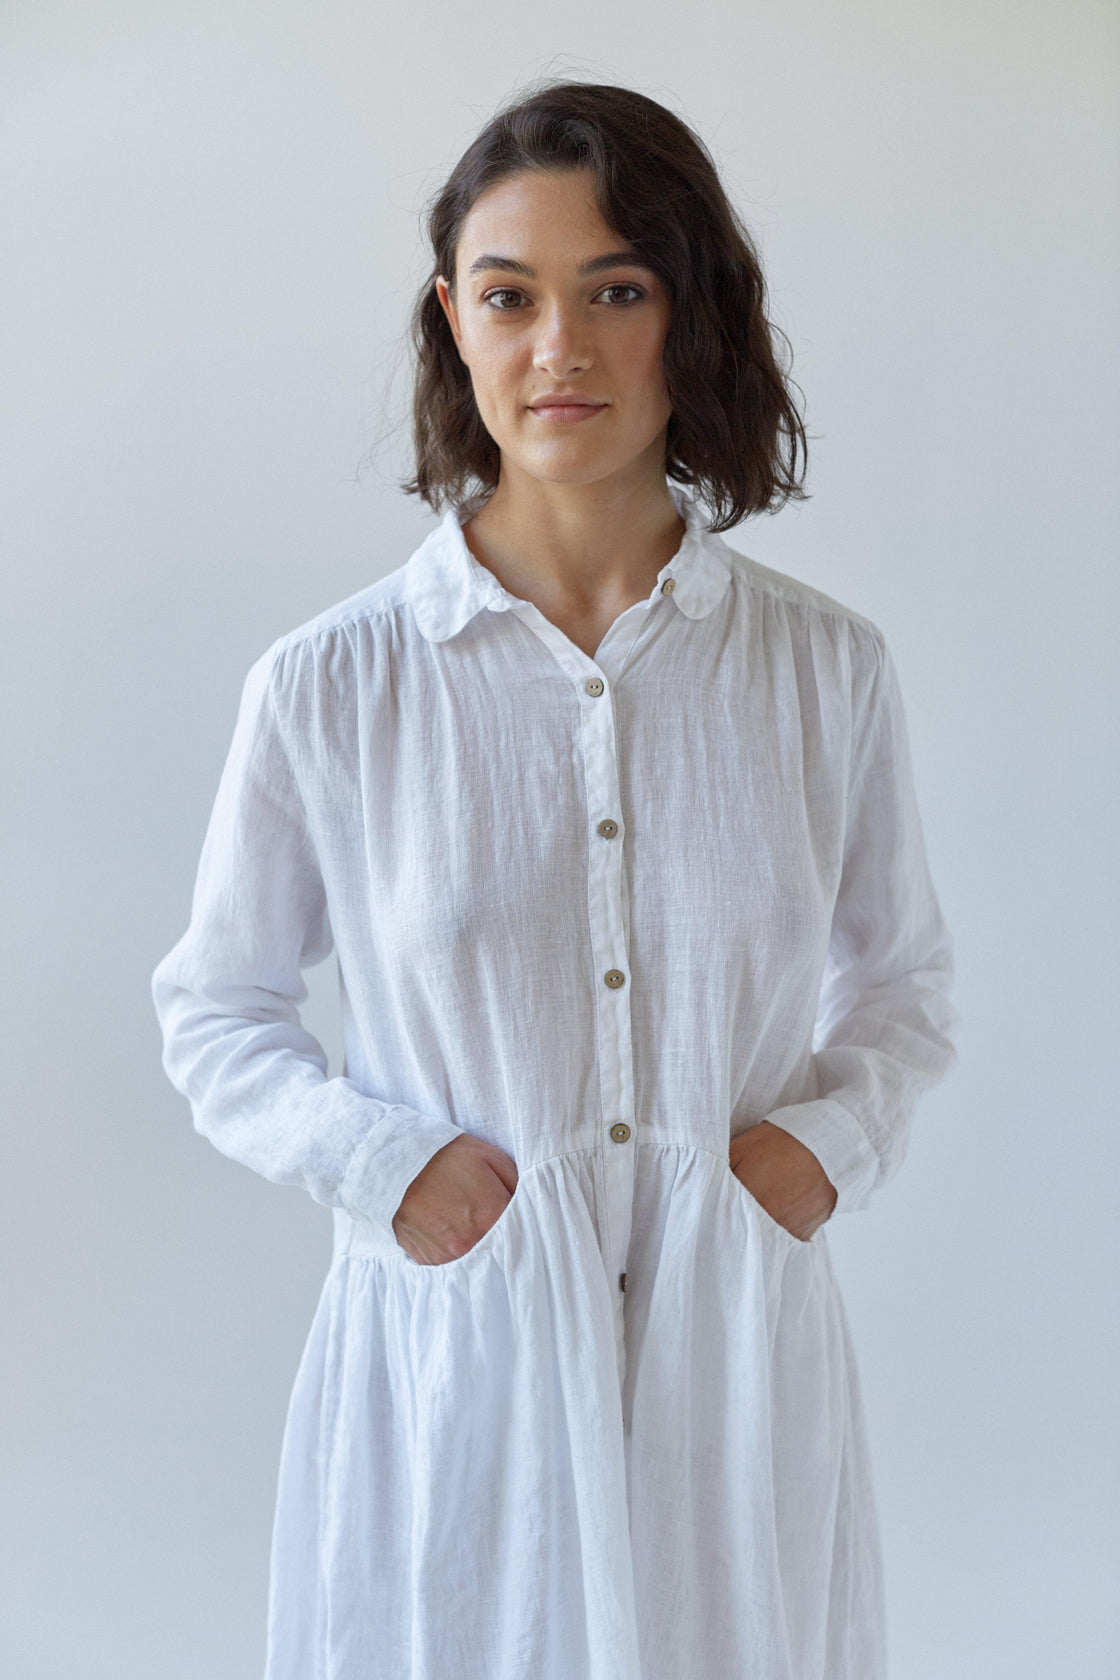 White collar linen dress with pockets - Manufacture de Lin